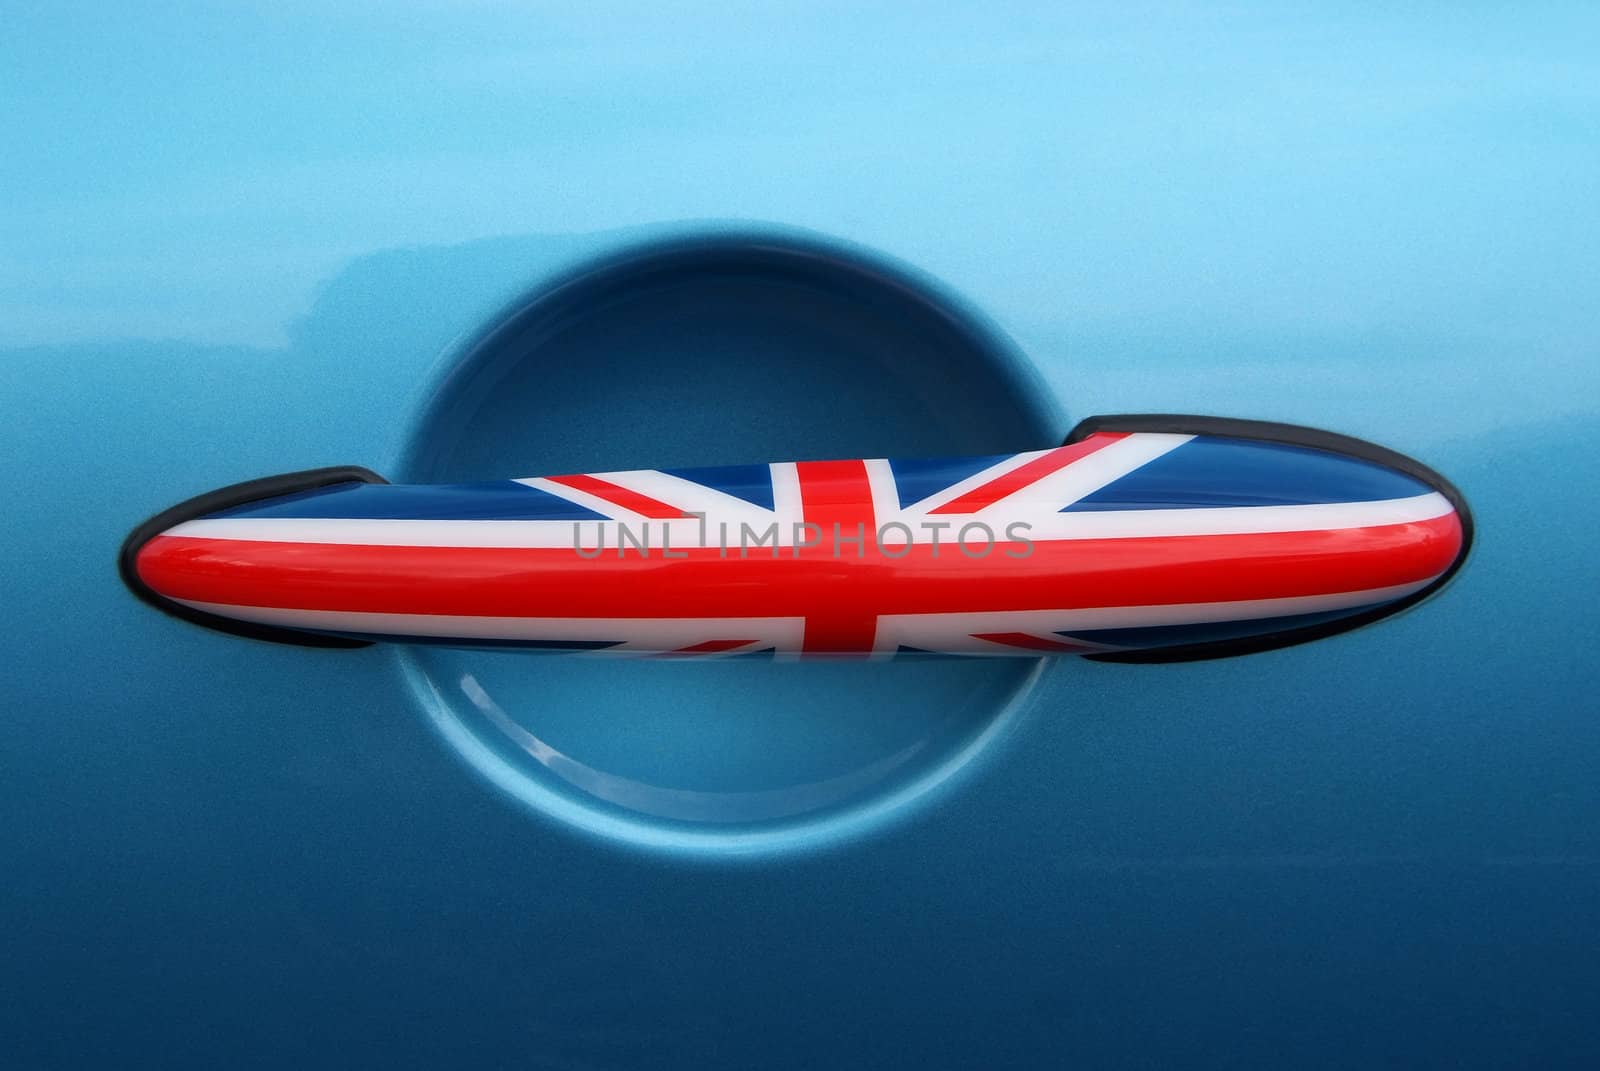 British flag design car door handles.